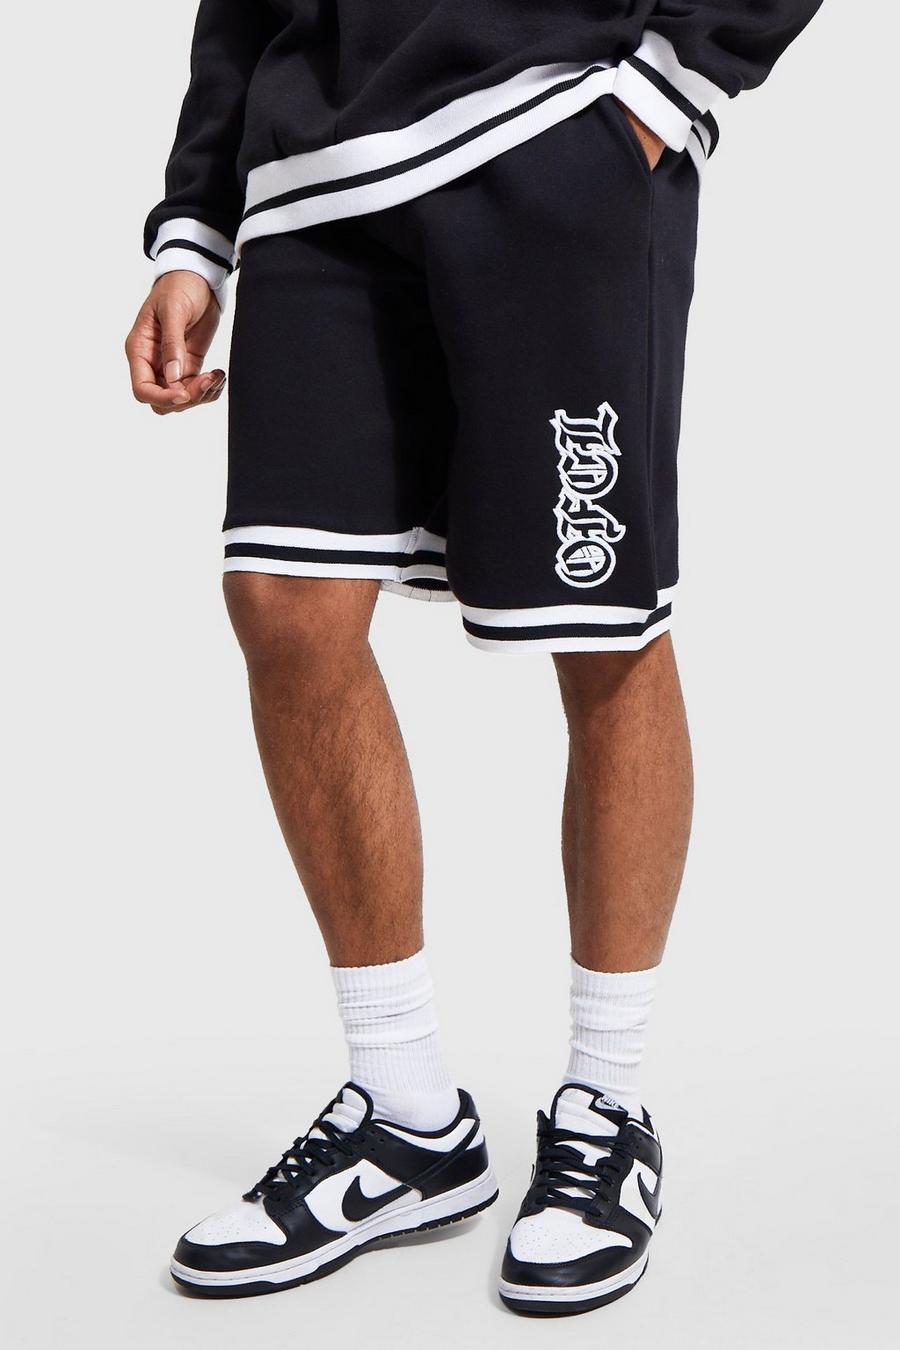 Pantalón corto estilo baloncesto con aplique universitario Ofcl, Black image number 1